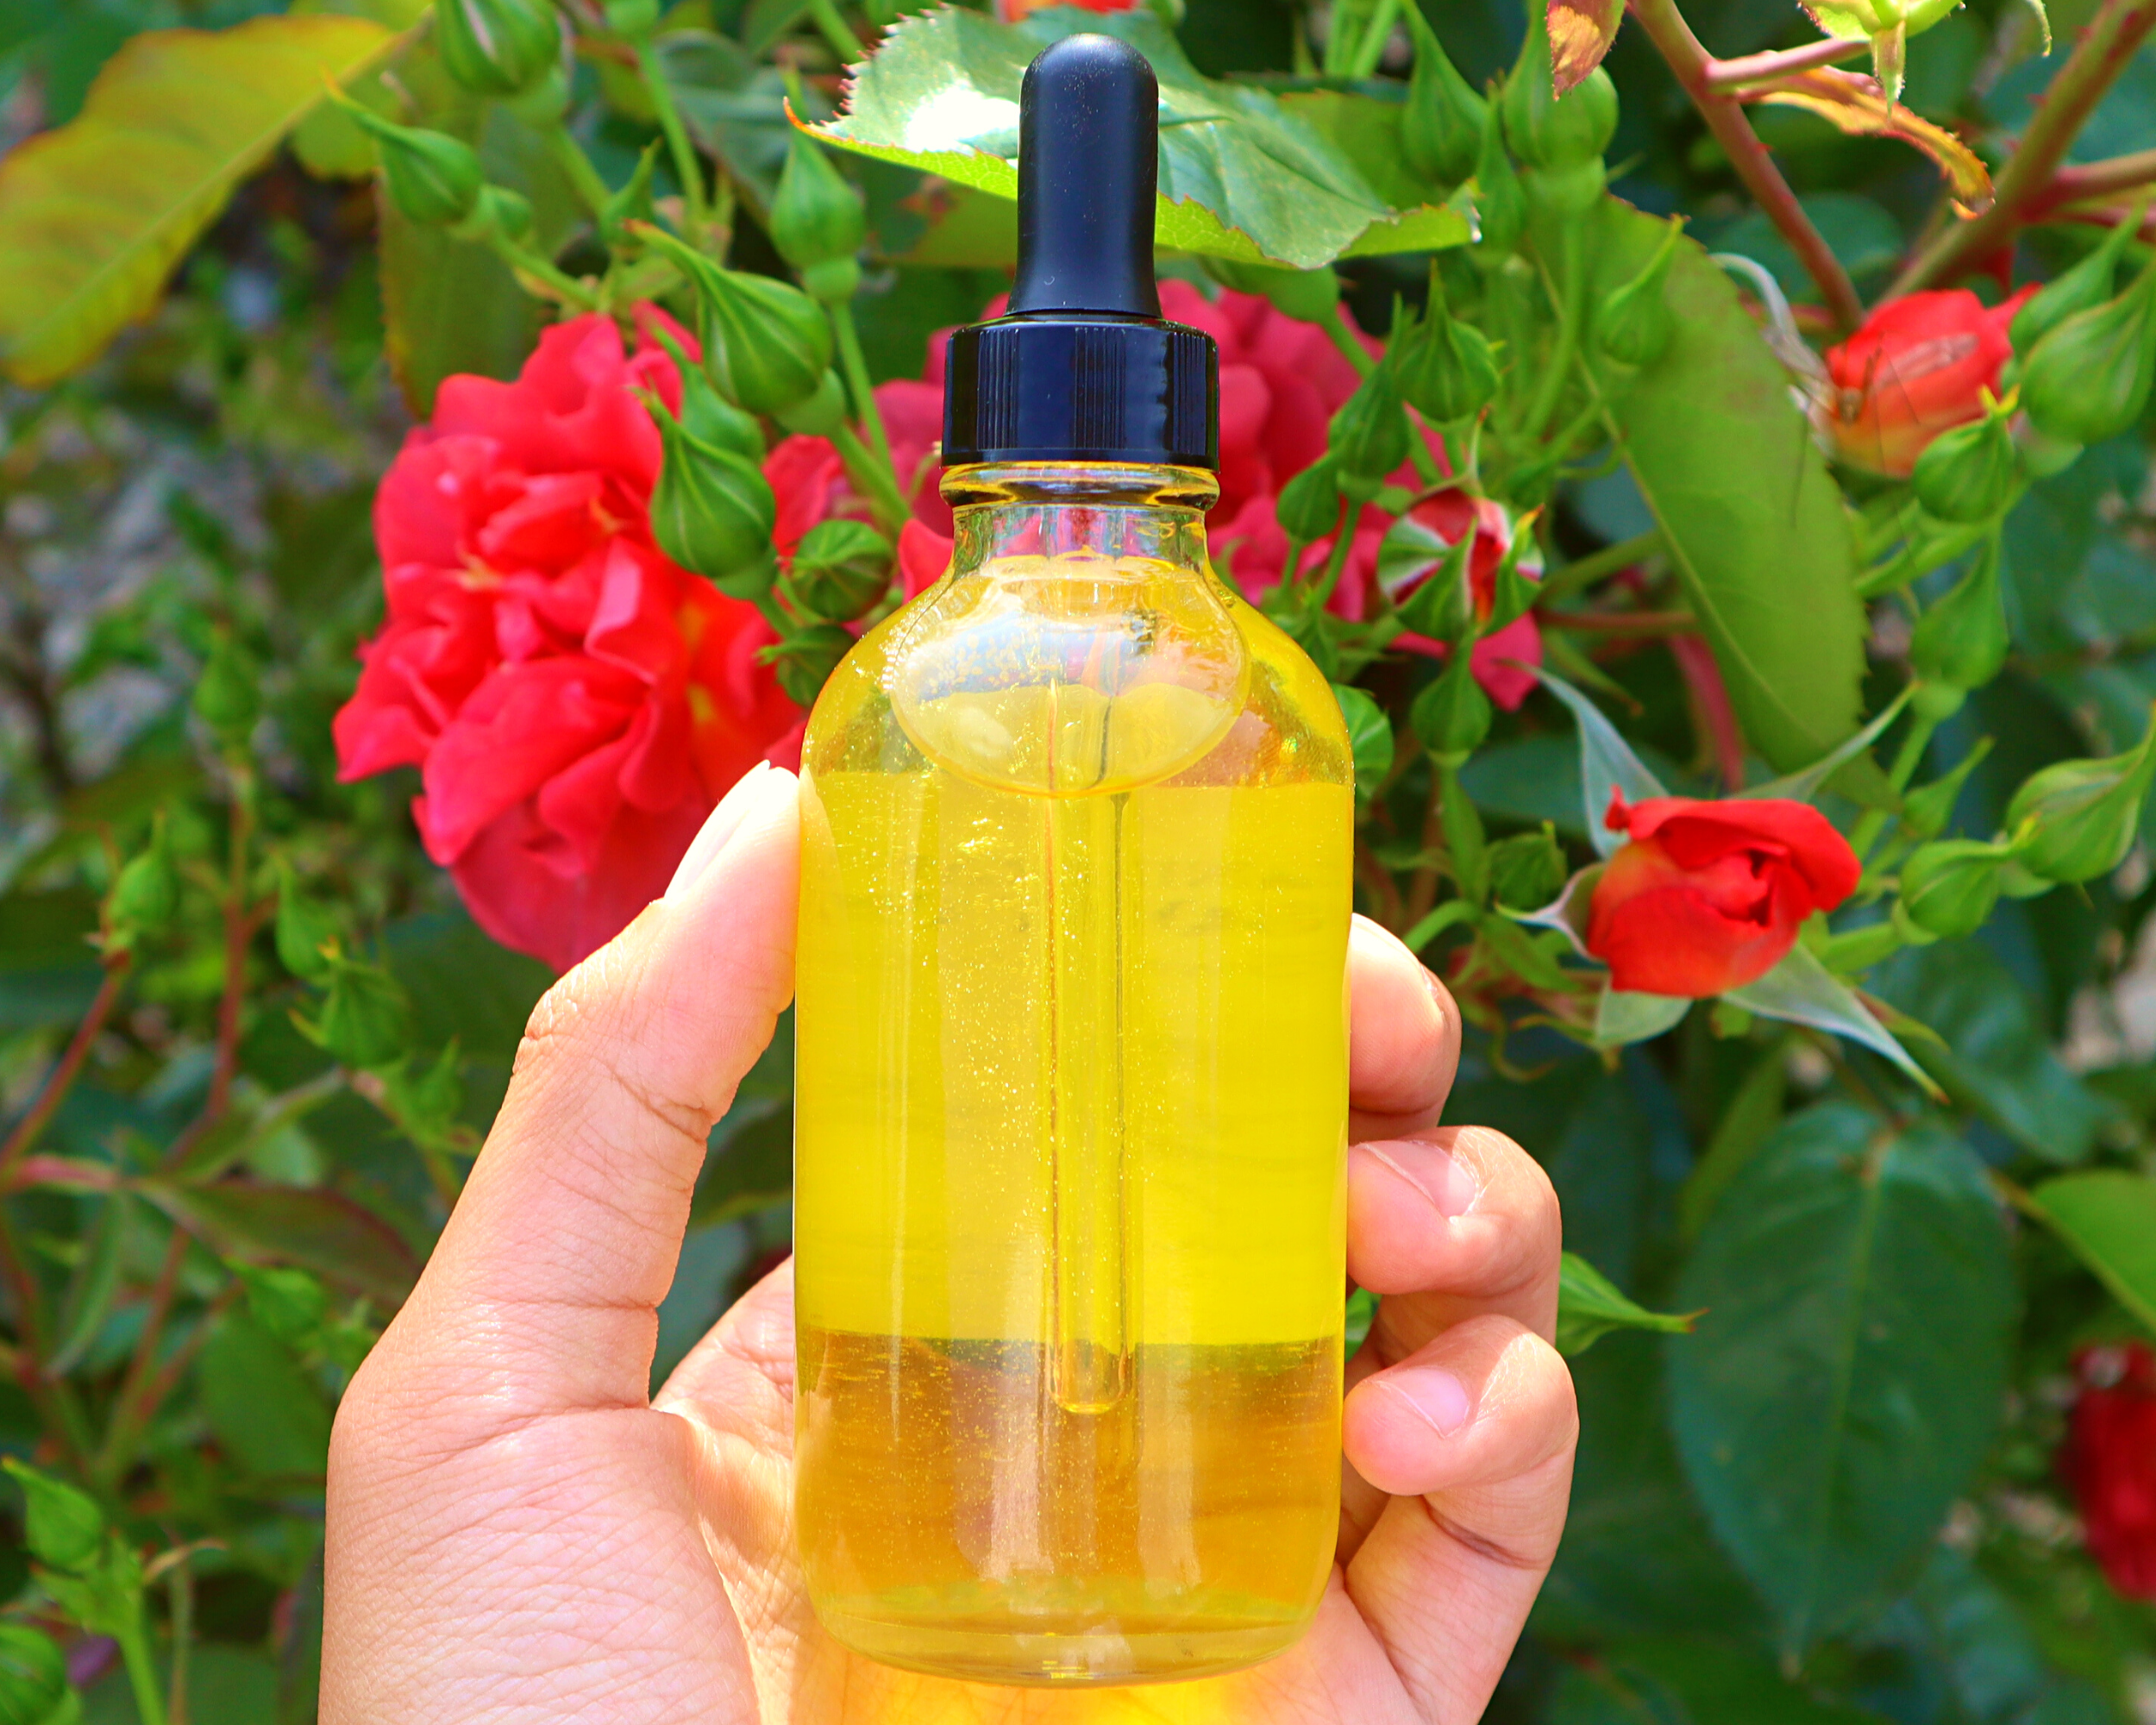 Soft Vanilla - Perfume Oil – Sweet Essentials